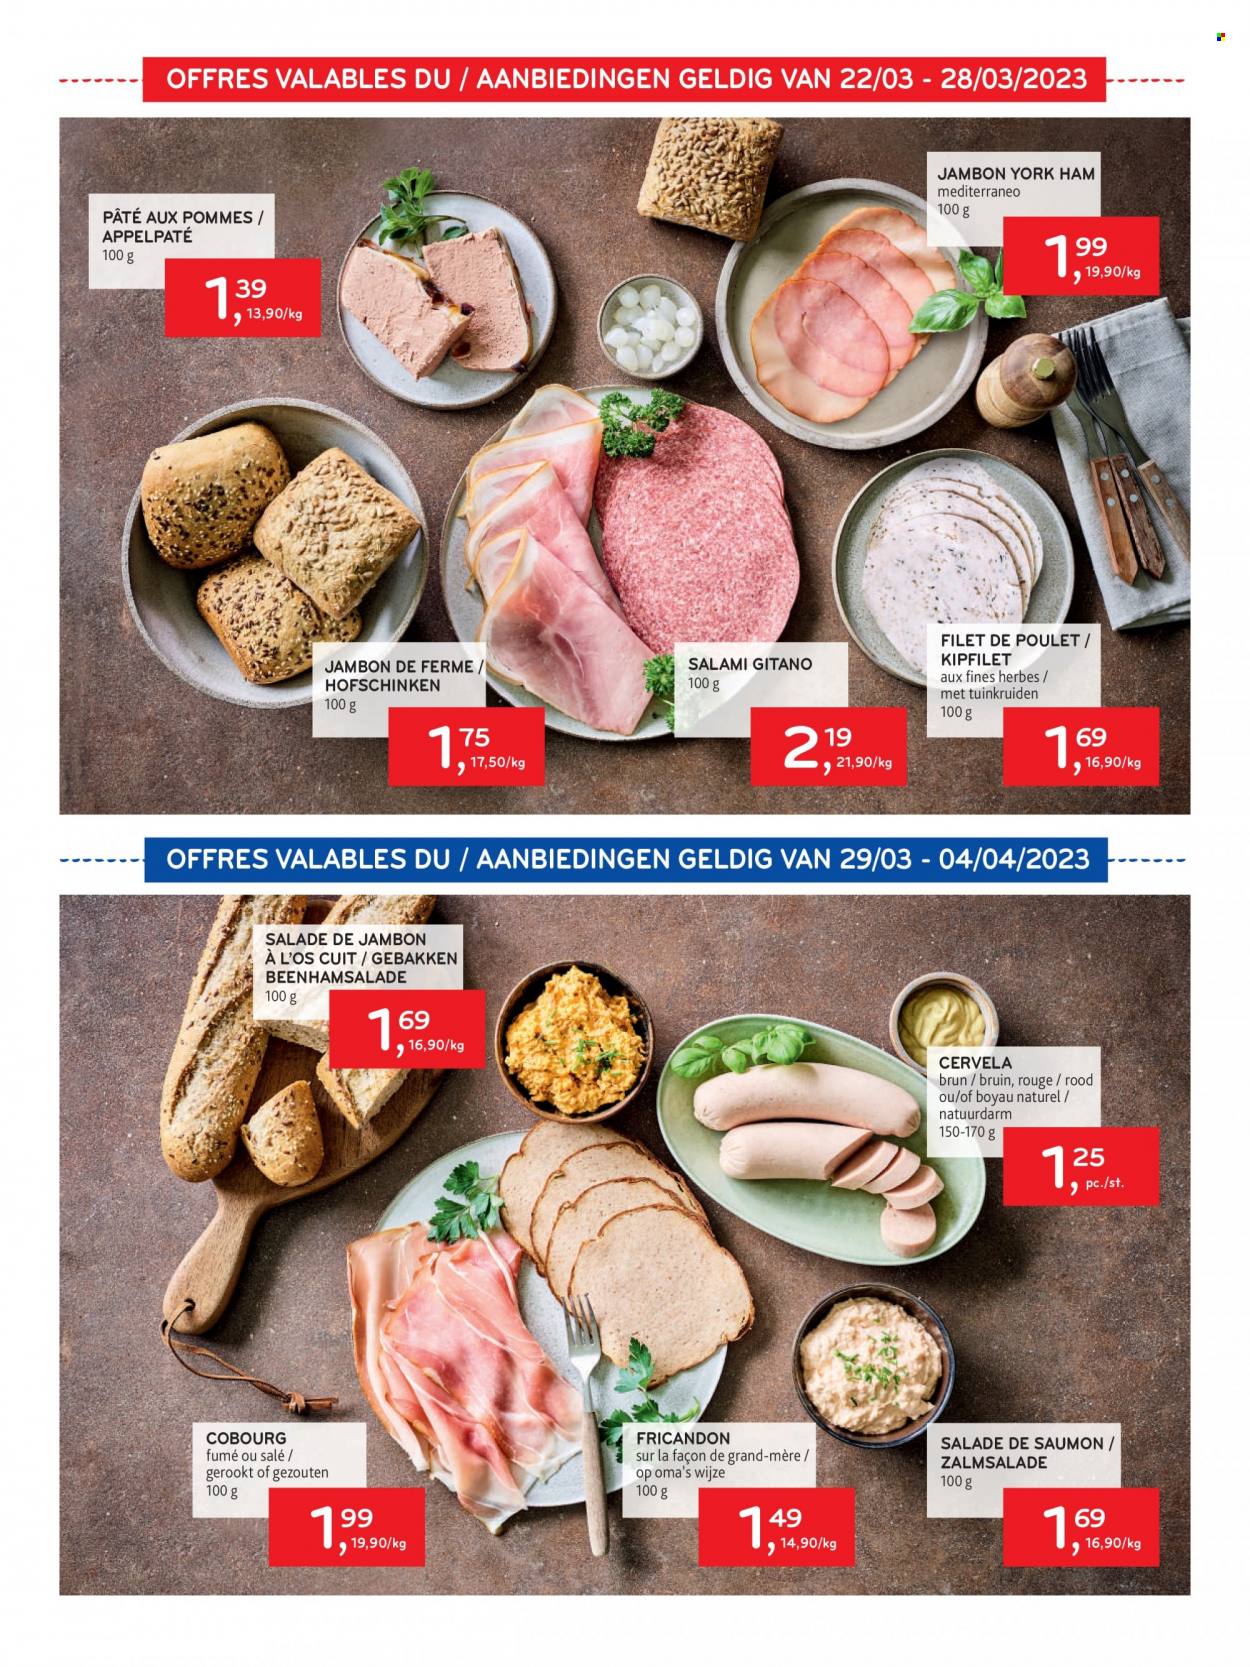 thumbnail - Alvo-aanbieding - 22/03/2023 - 04/04/2023 -  producten in de aanbieding - kipfilet, ham, salami, paté. Pagina 7.